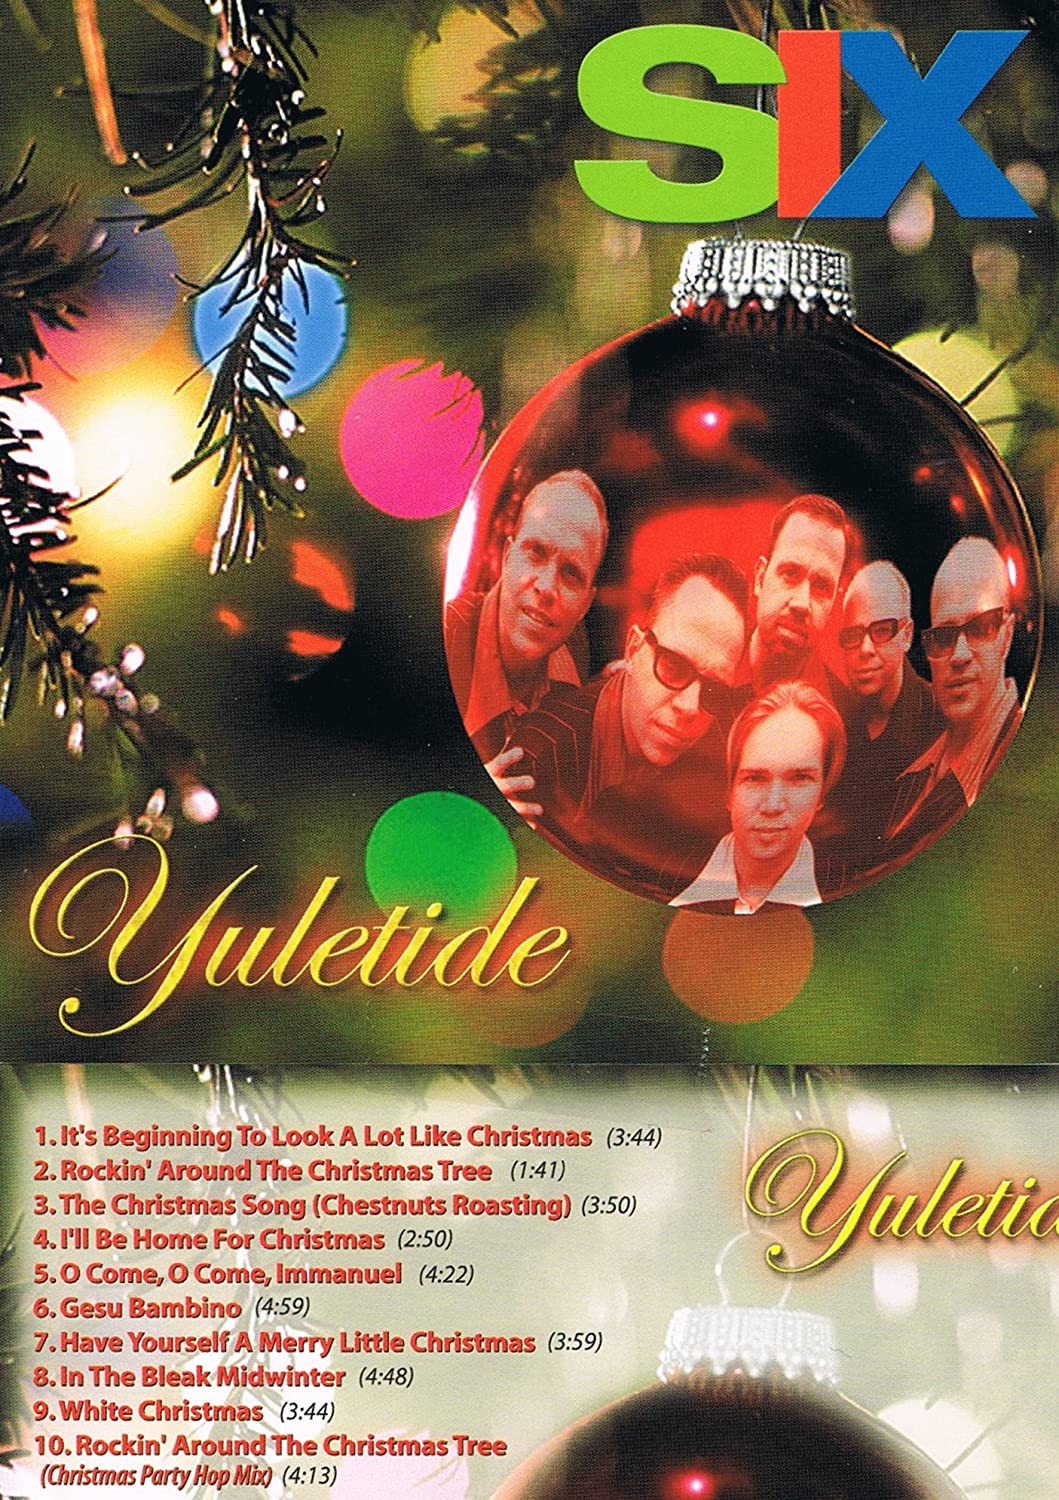 Yuletide (Christmas Music) [Audio CD] Six